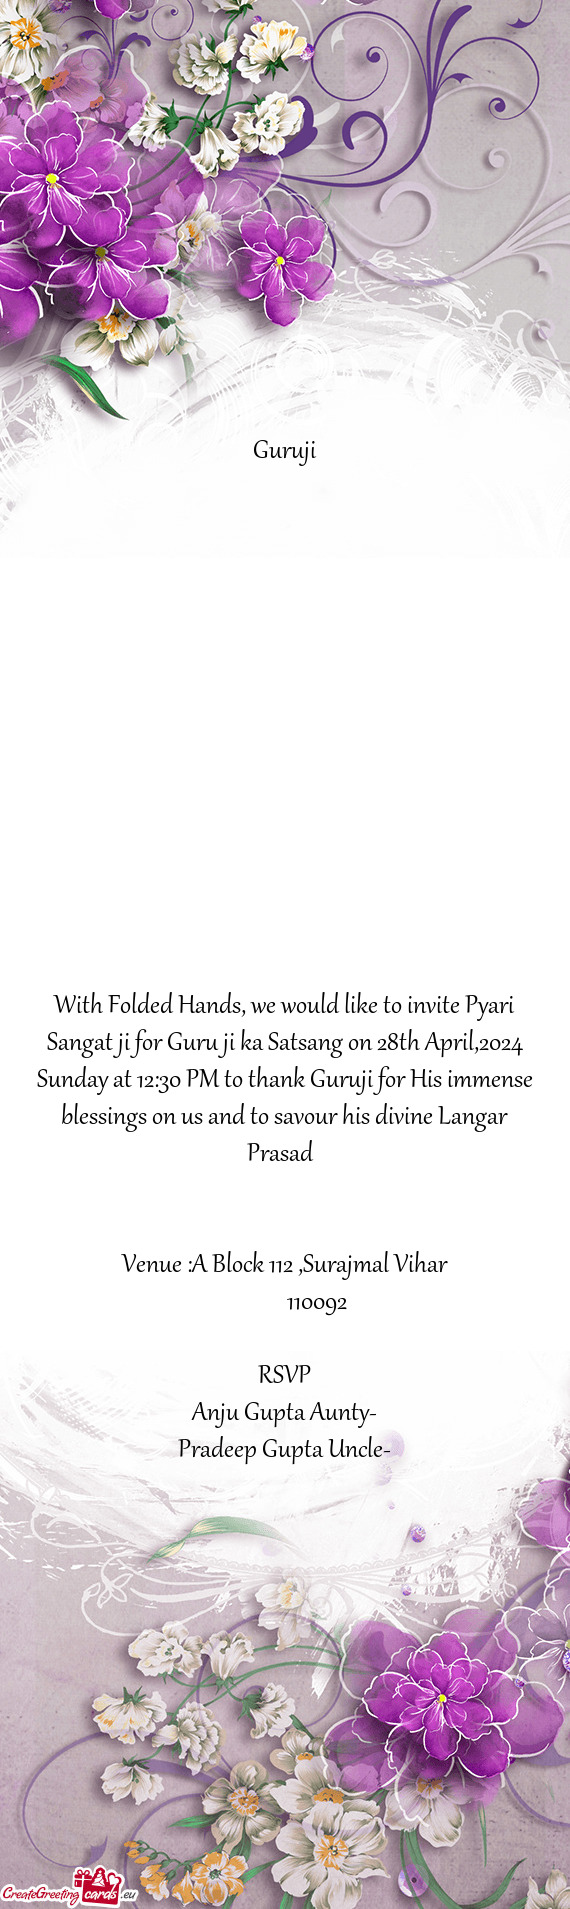 With Folded Hands, we would like to invite Pyari Sangat ji for Guru ji ka Satsang on 28th April,2024